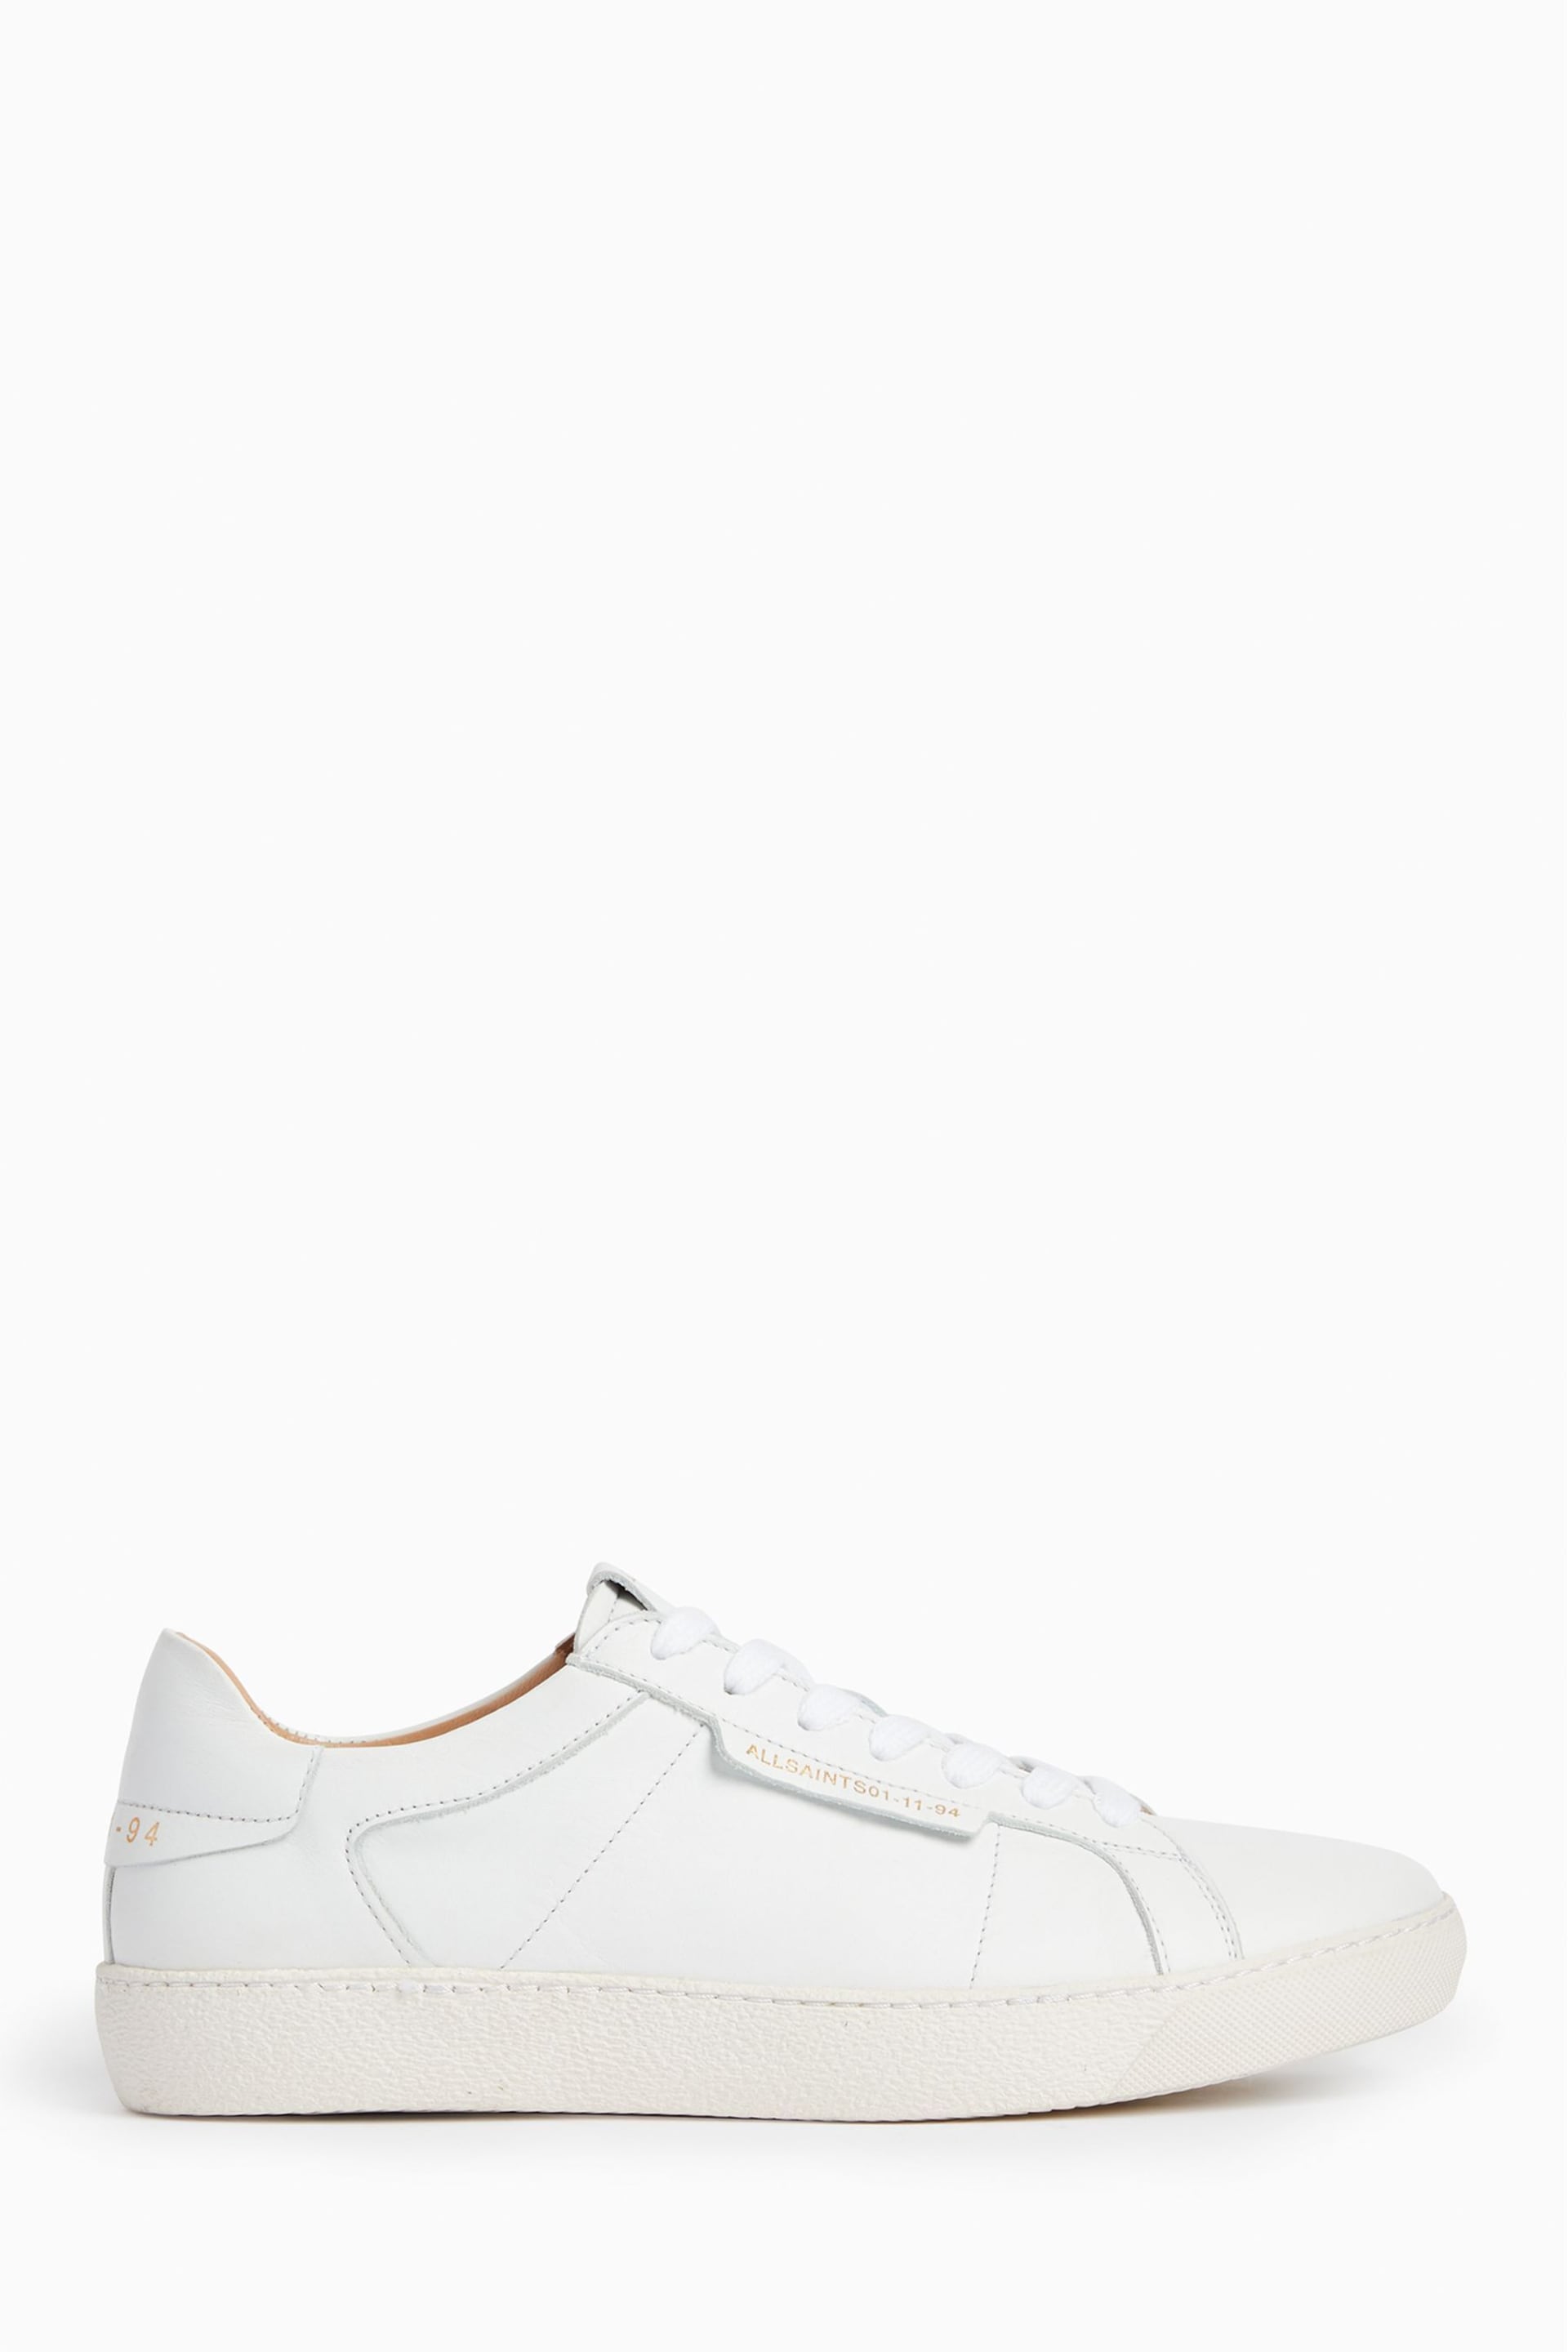 AllSaints White Sheer Sneakers - Image 1 of 7